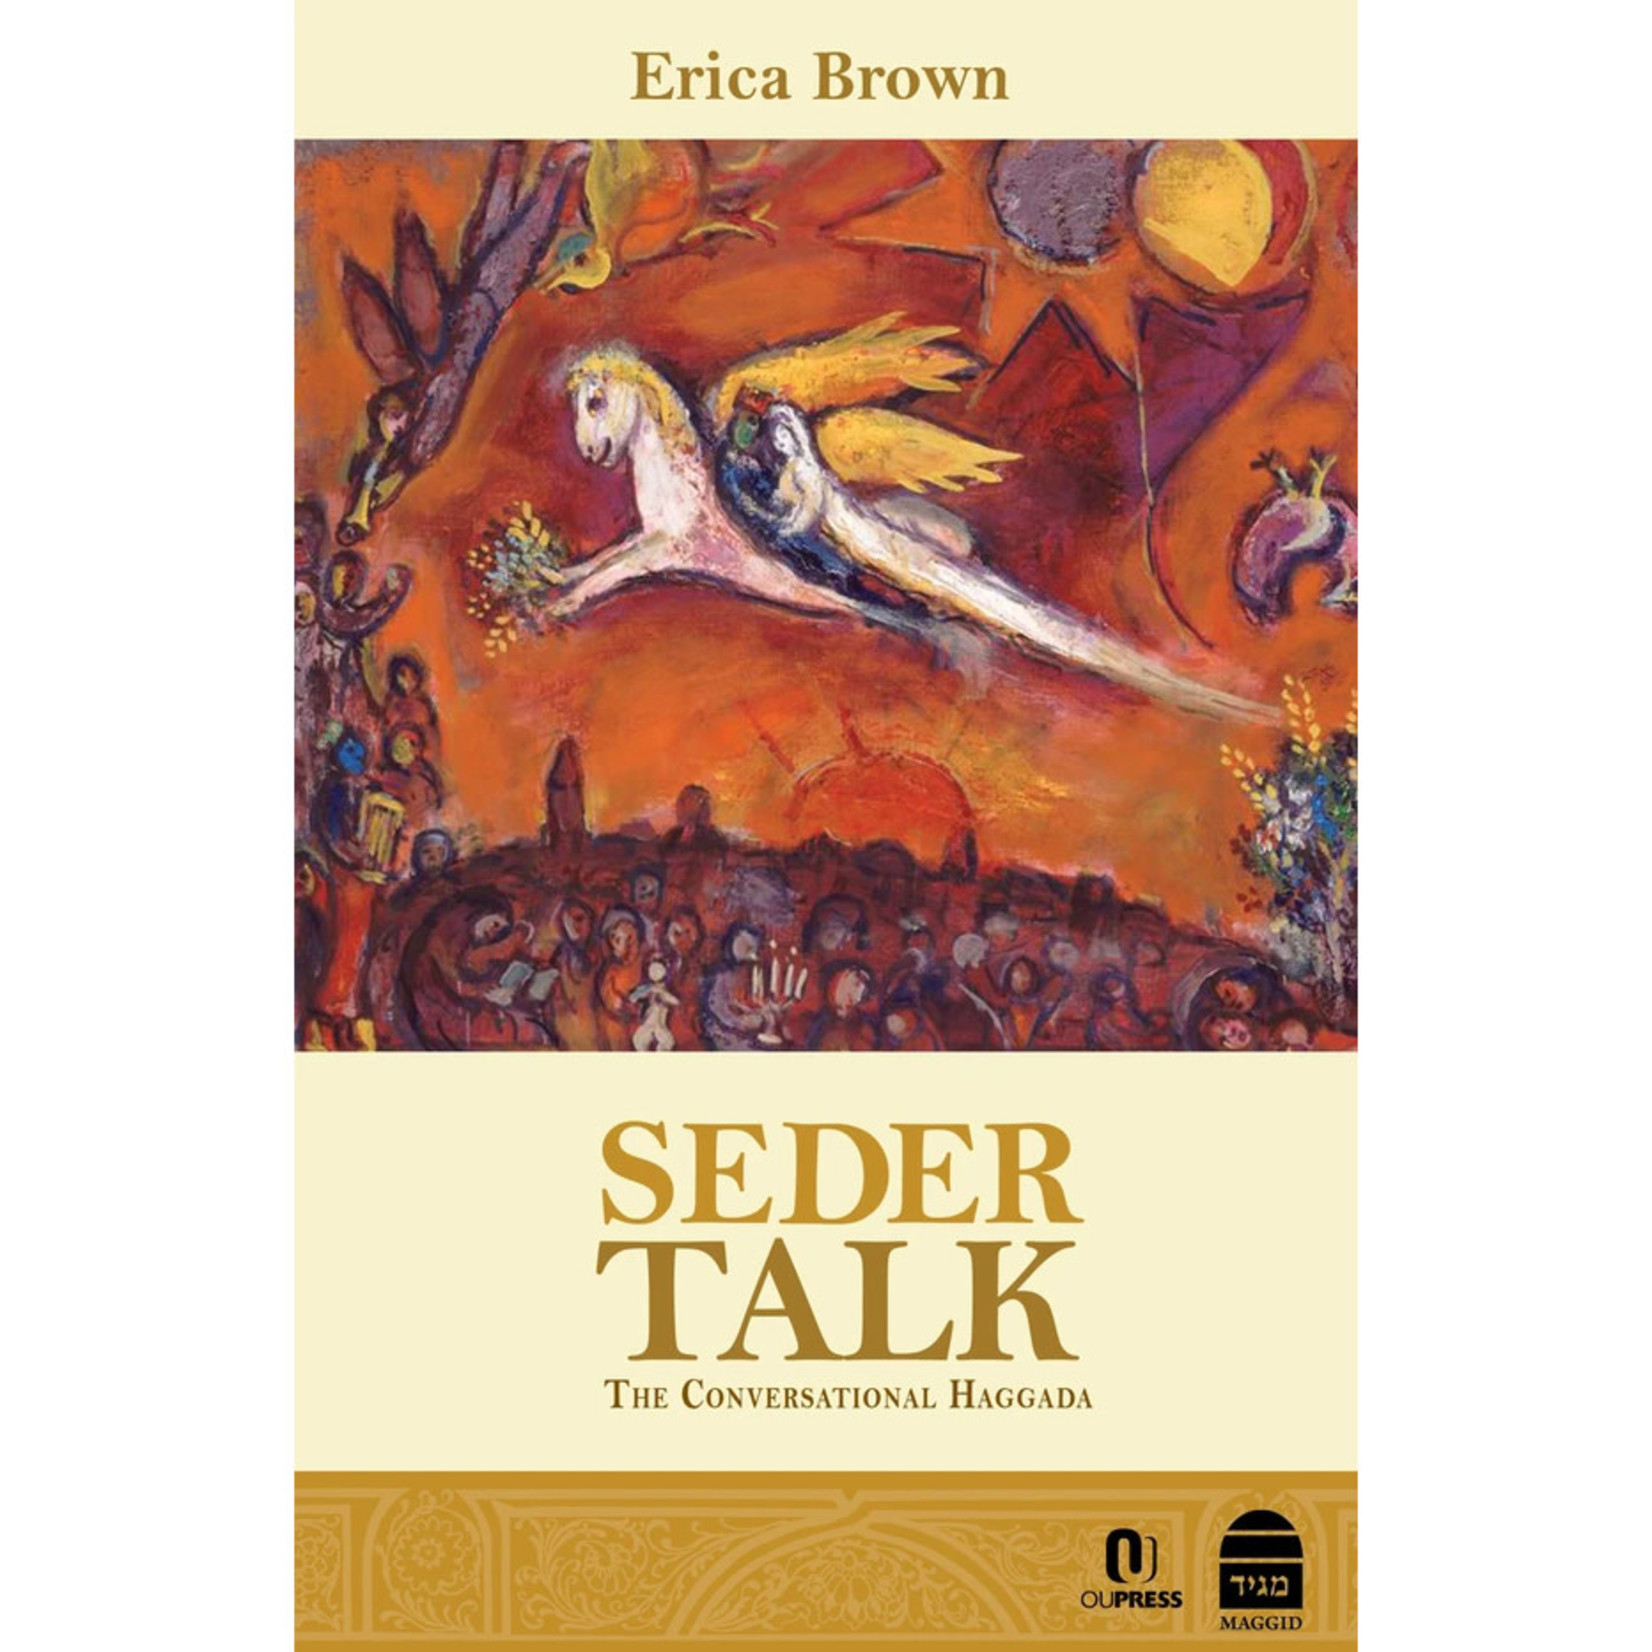 Erica Brown Seder Talk, The Conversational Haggadah